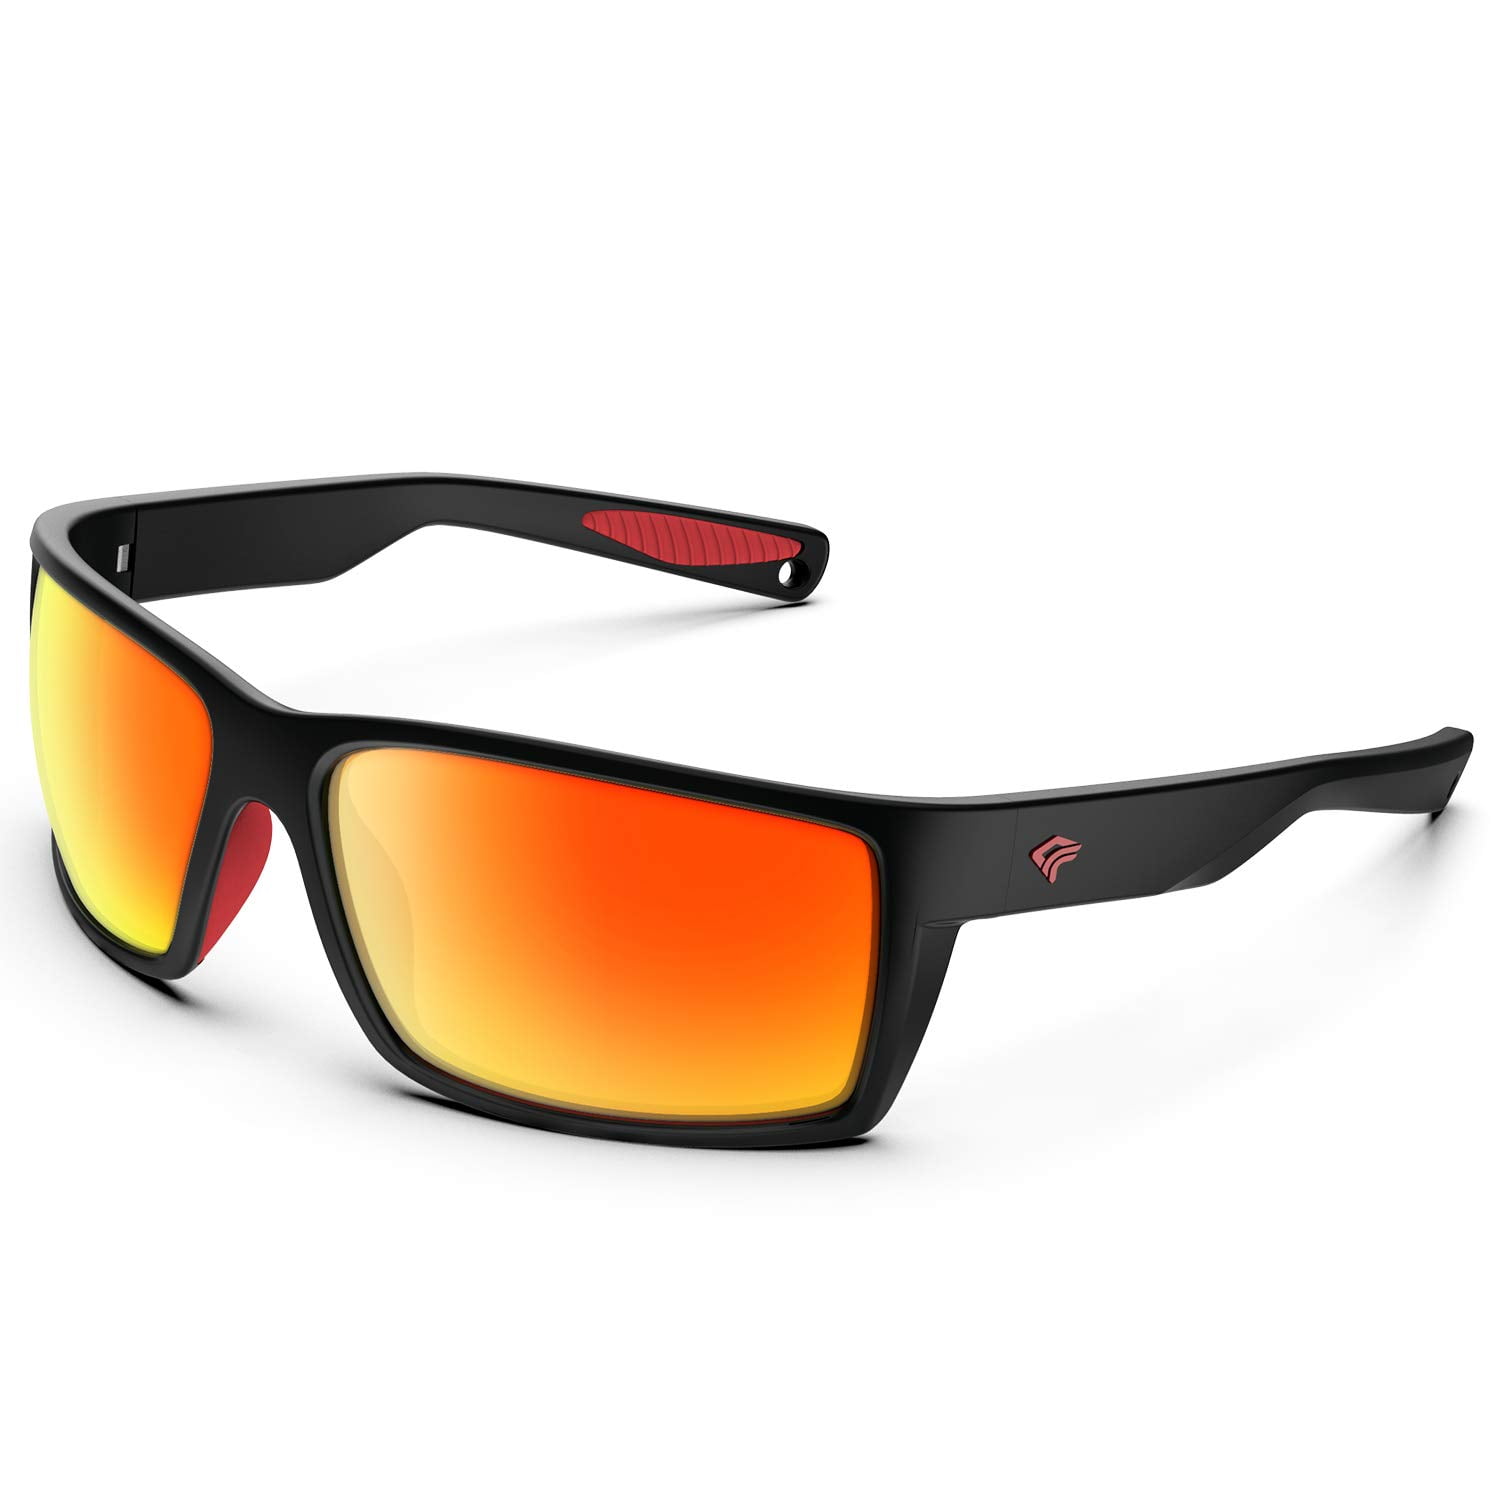 TOREGE Sports Polarized Sunglasses for Men Women Flexible